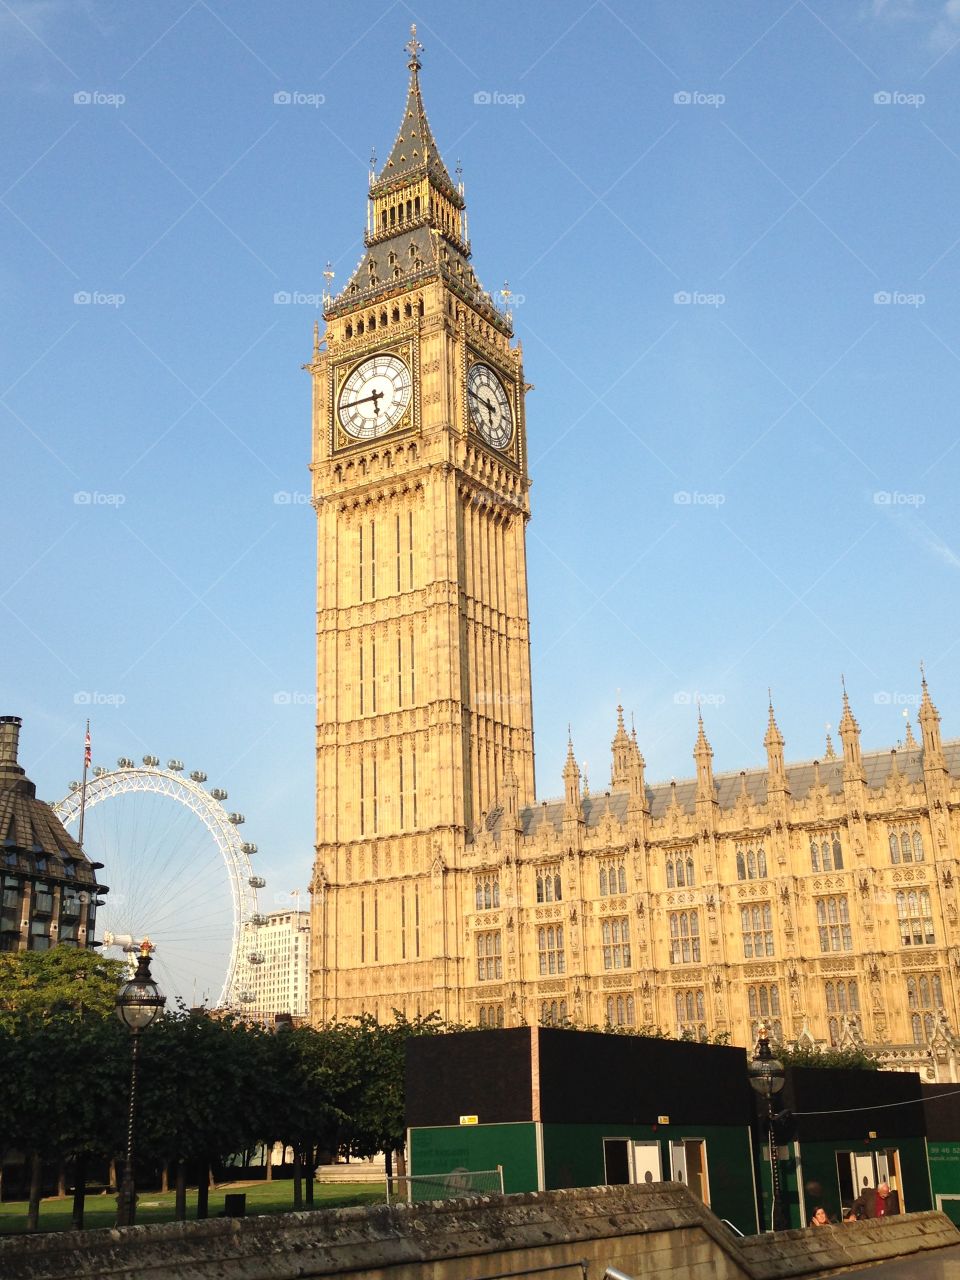 Big Ben clock tower Westminster London uk